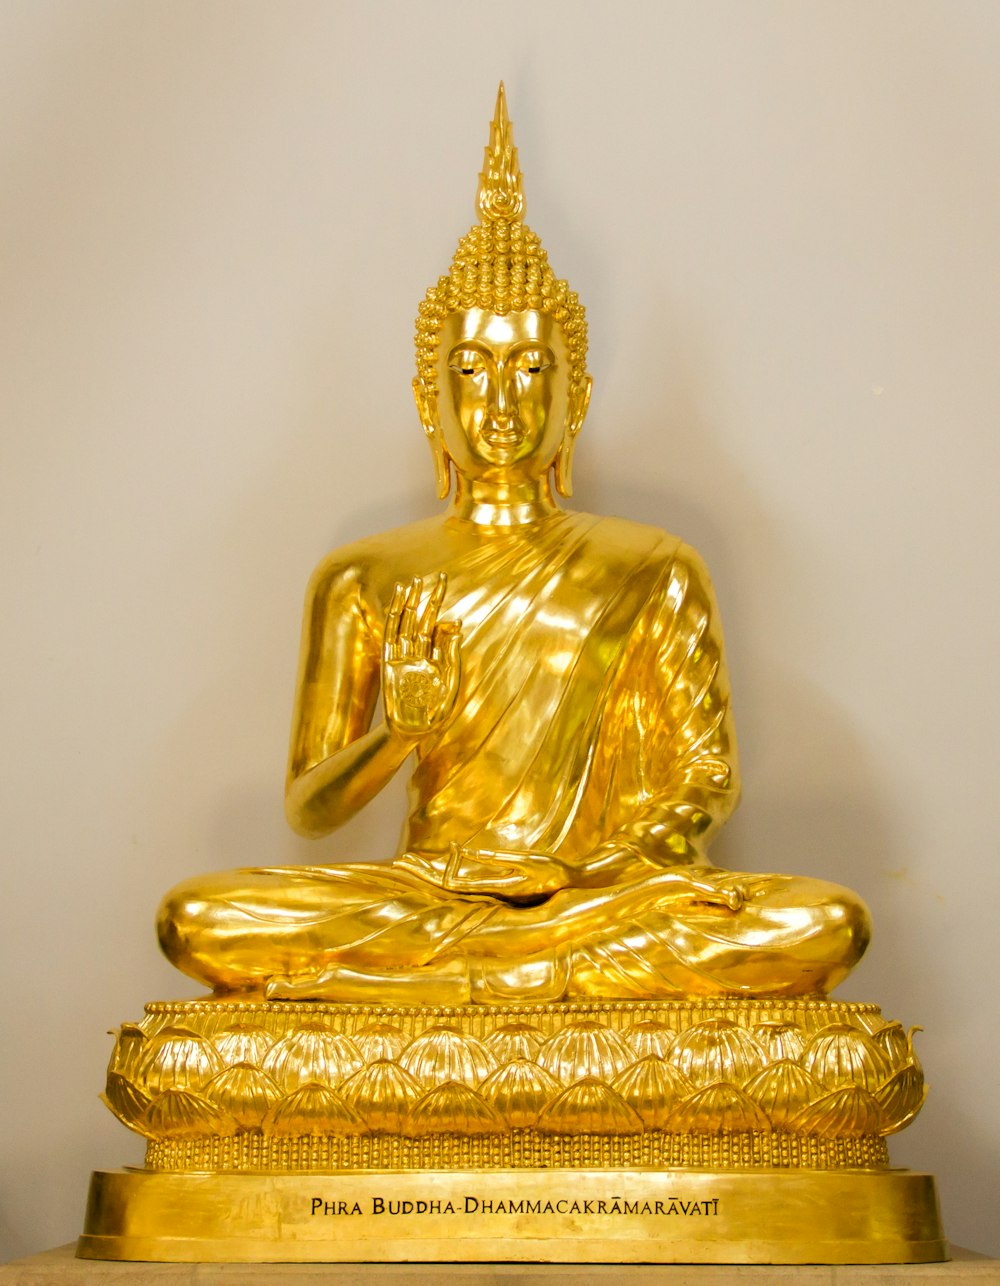 A golden religious statue.